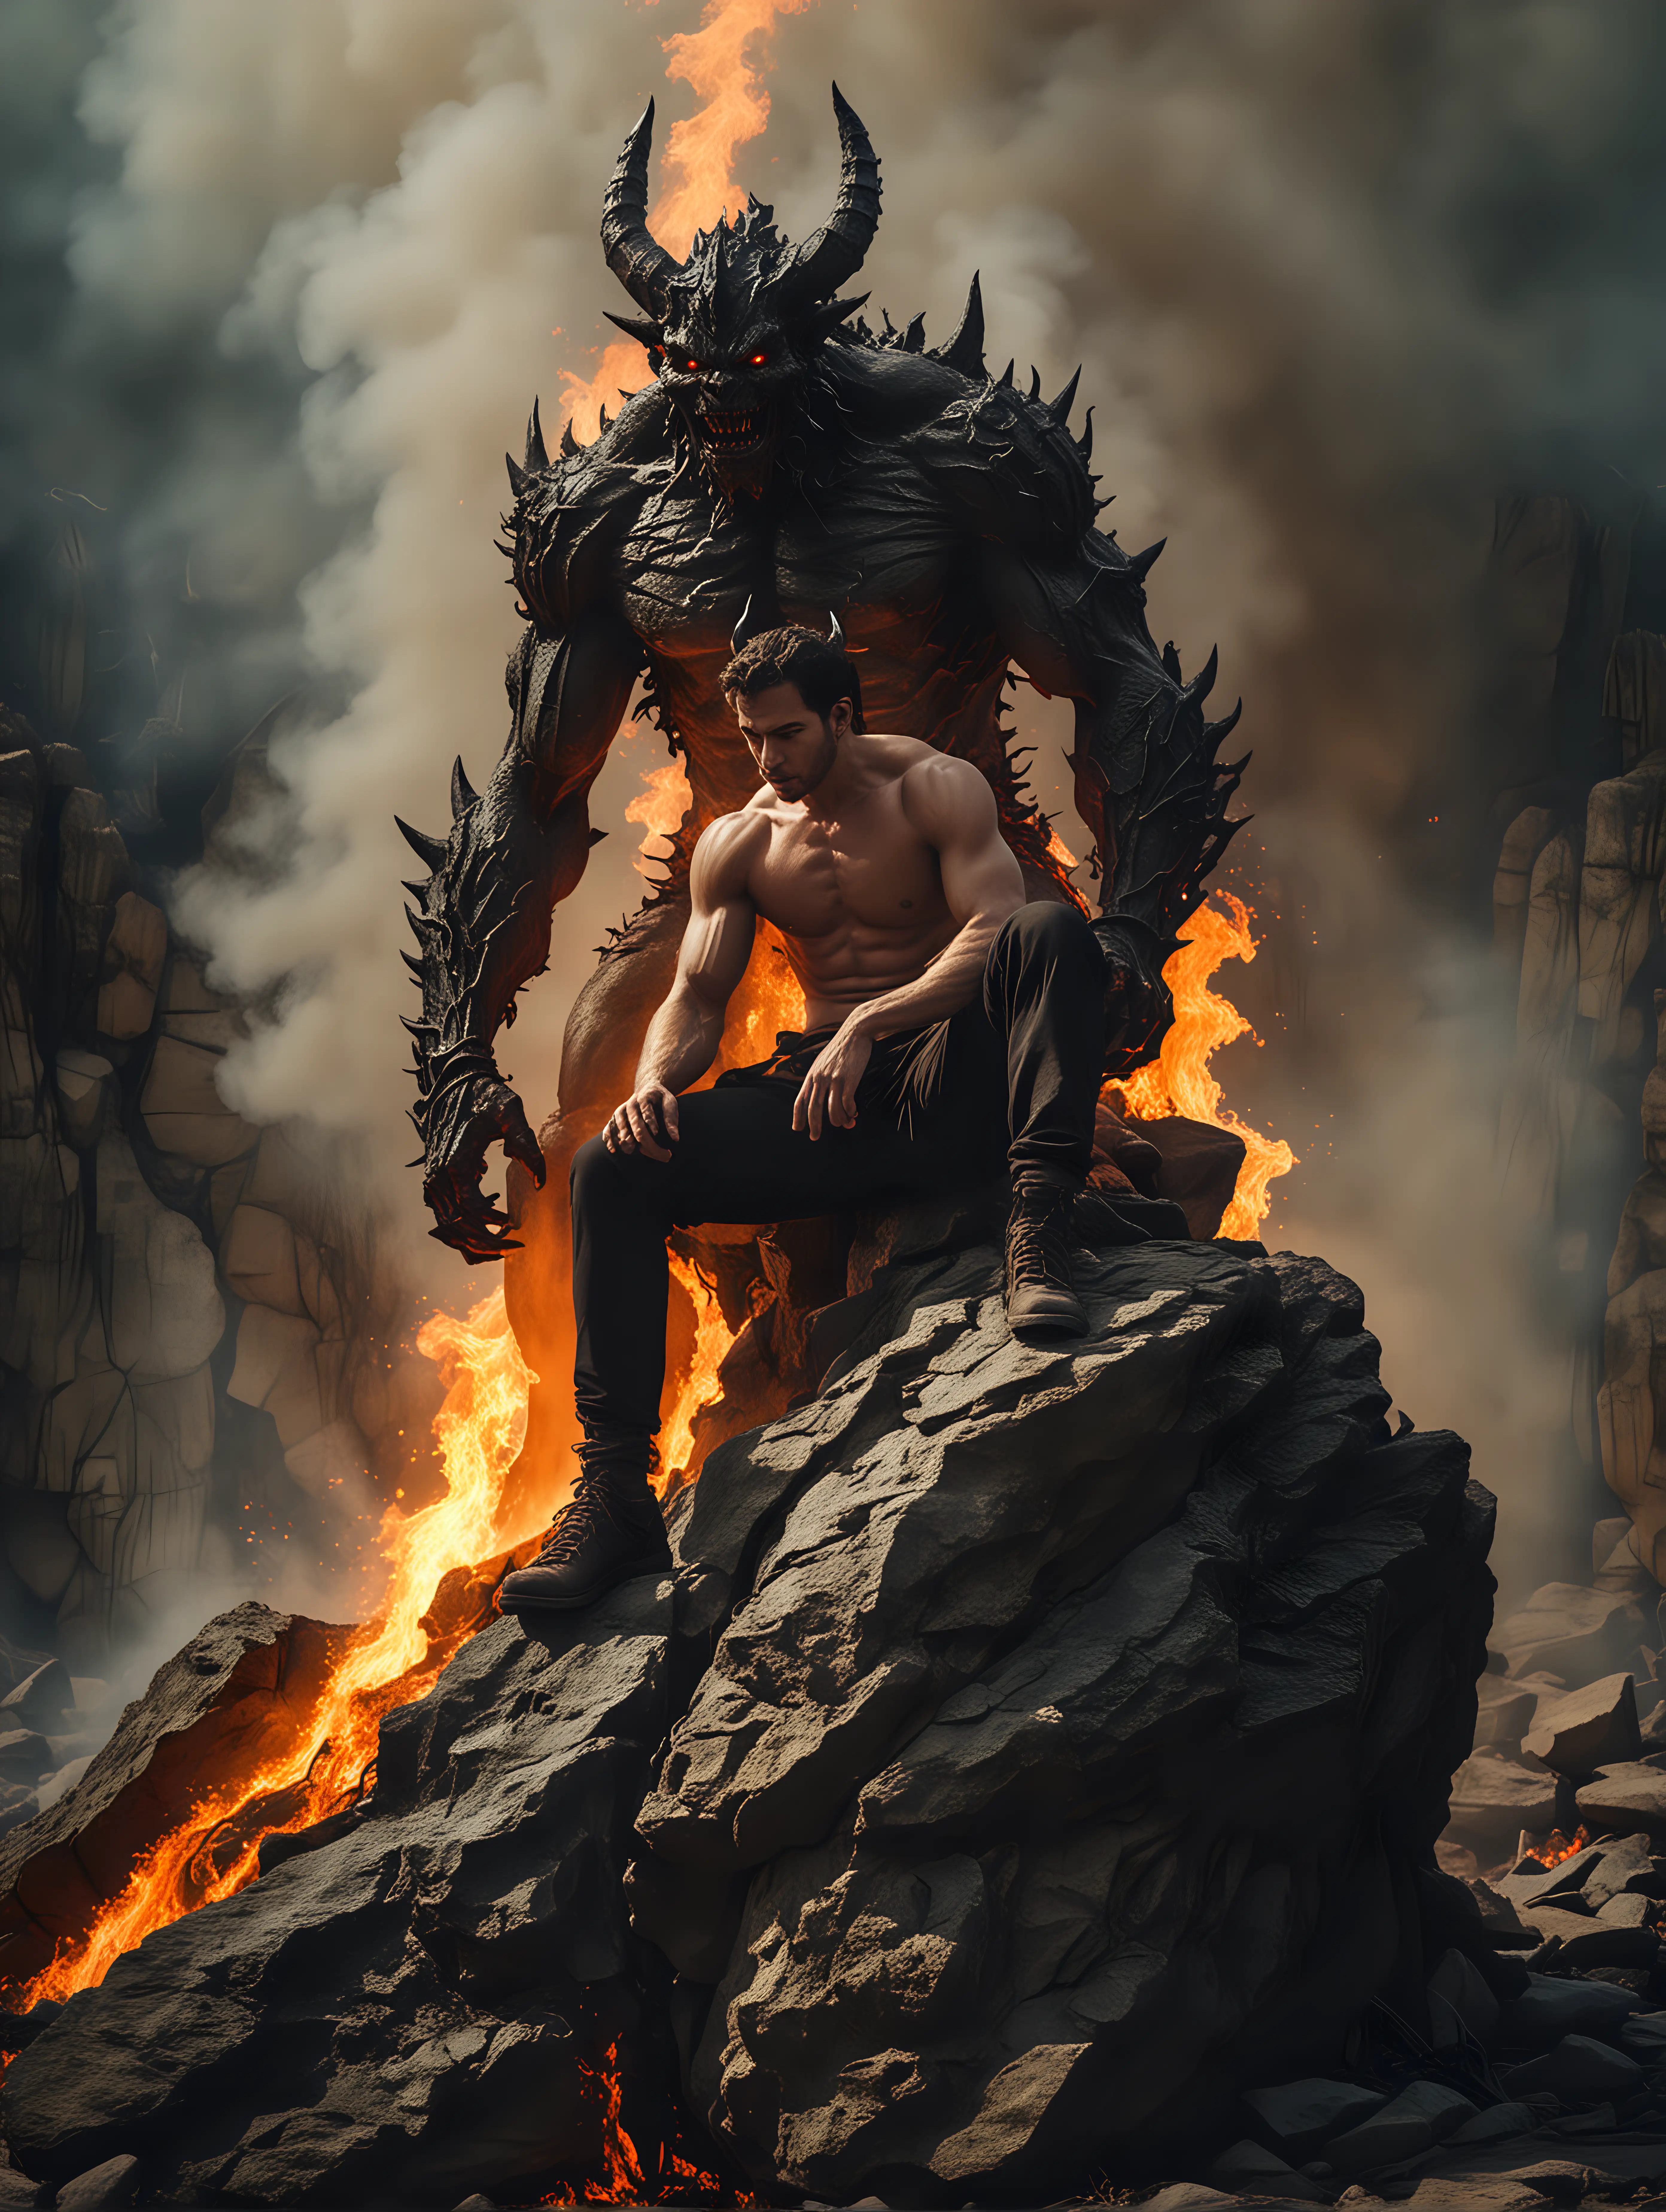 man sitting on a rock demon climbing up fire